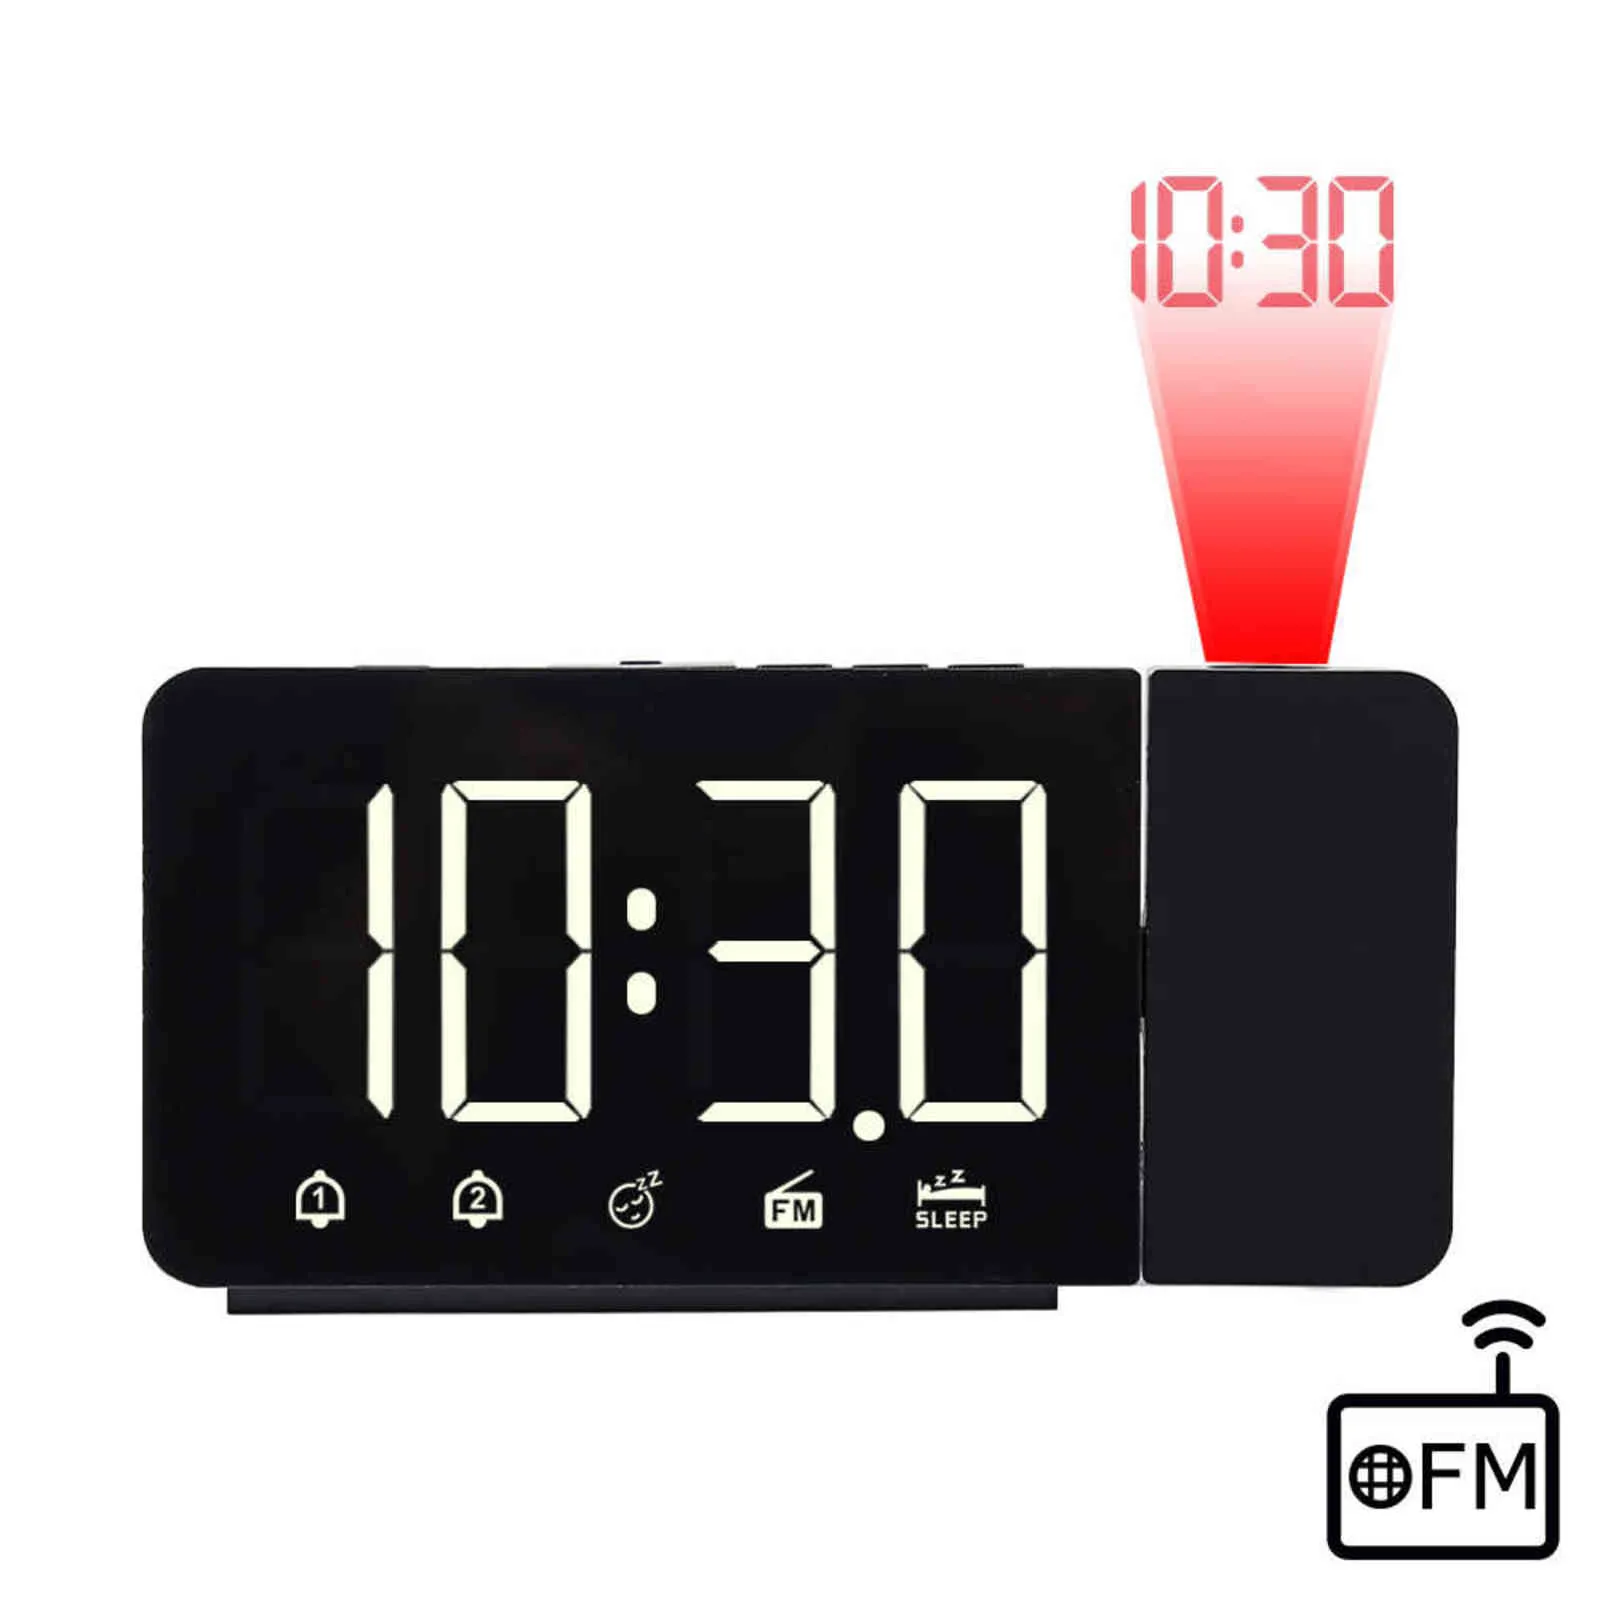 FANJU FJ3211 FMラジオLEDデジタル時計デュアルアラームテーブルデスククロックプロジェクターUSB目覚め時計時間投影スヌーズ211112